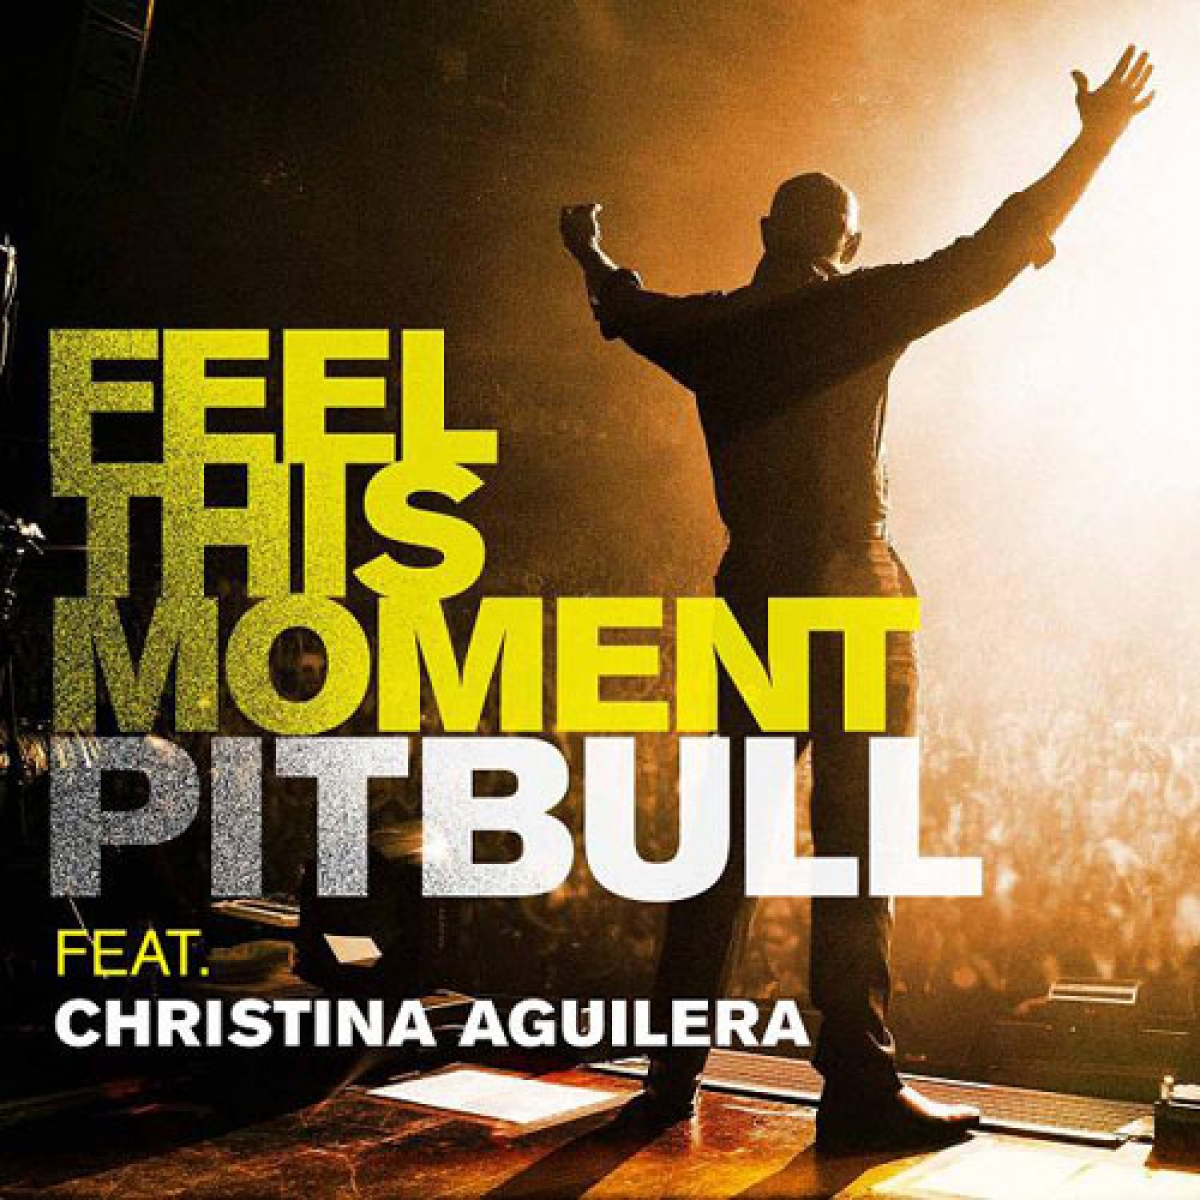 PITBULL - Feel This Moment (feat. Christina Aguilera)